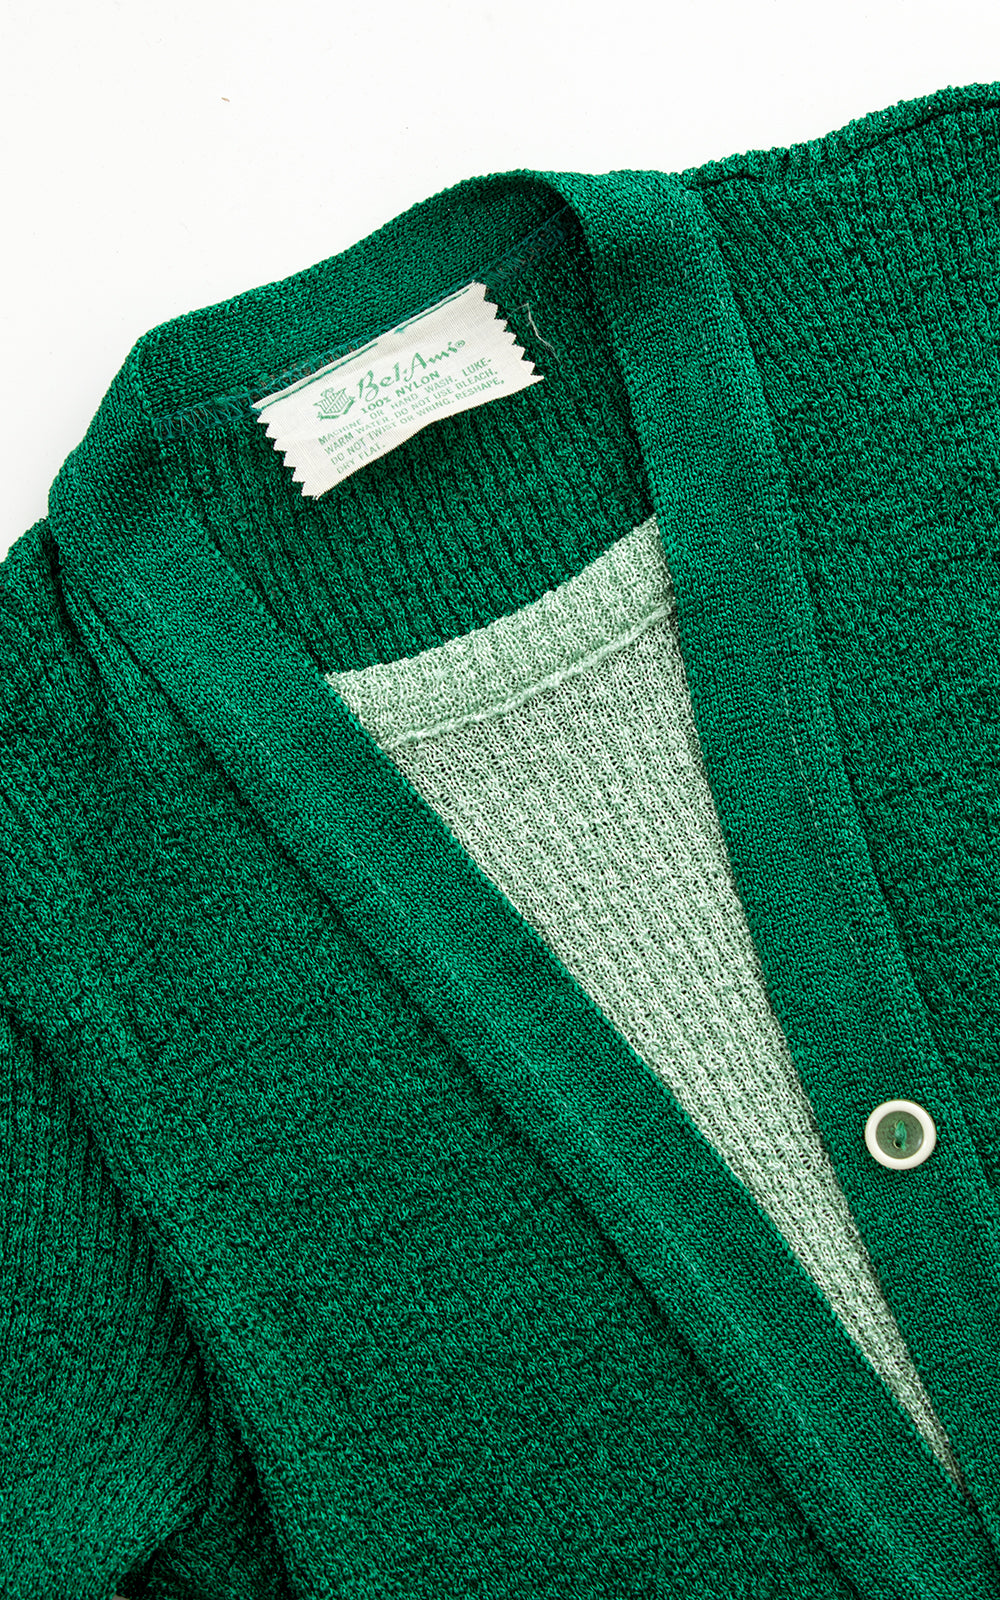 1970s Knit Faux Sweater Set